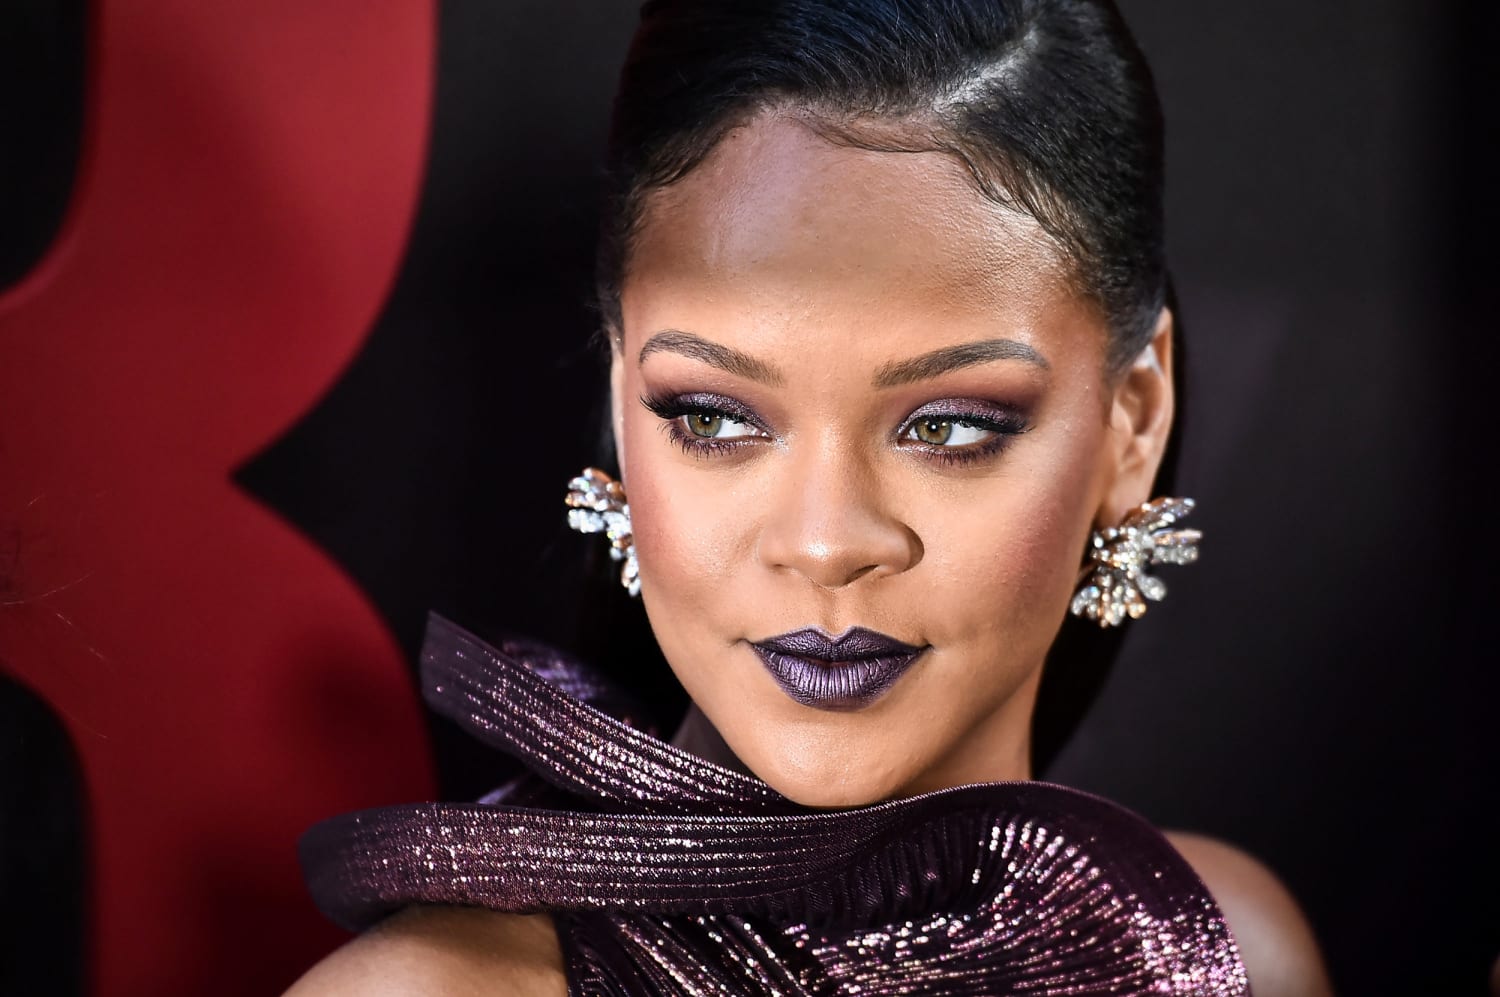 Rihanna to headline Super Bowl 2023 halftime show